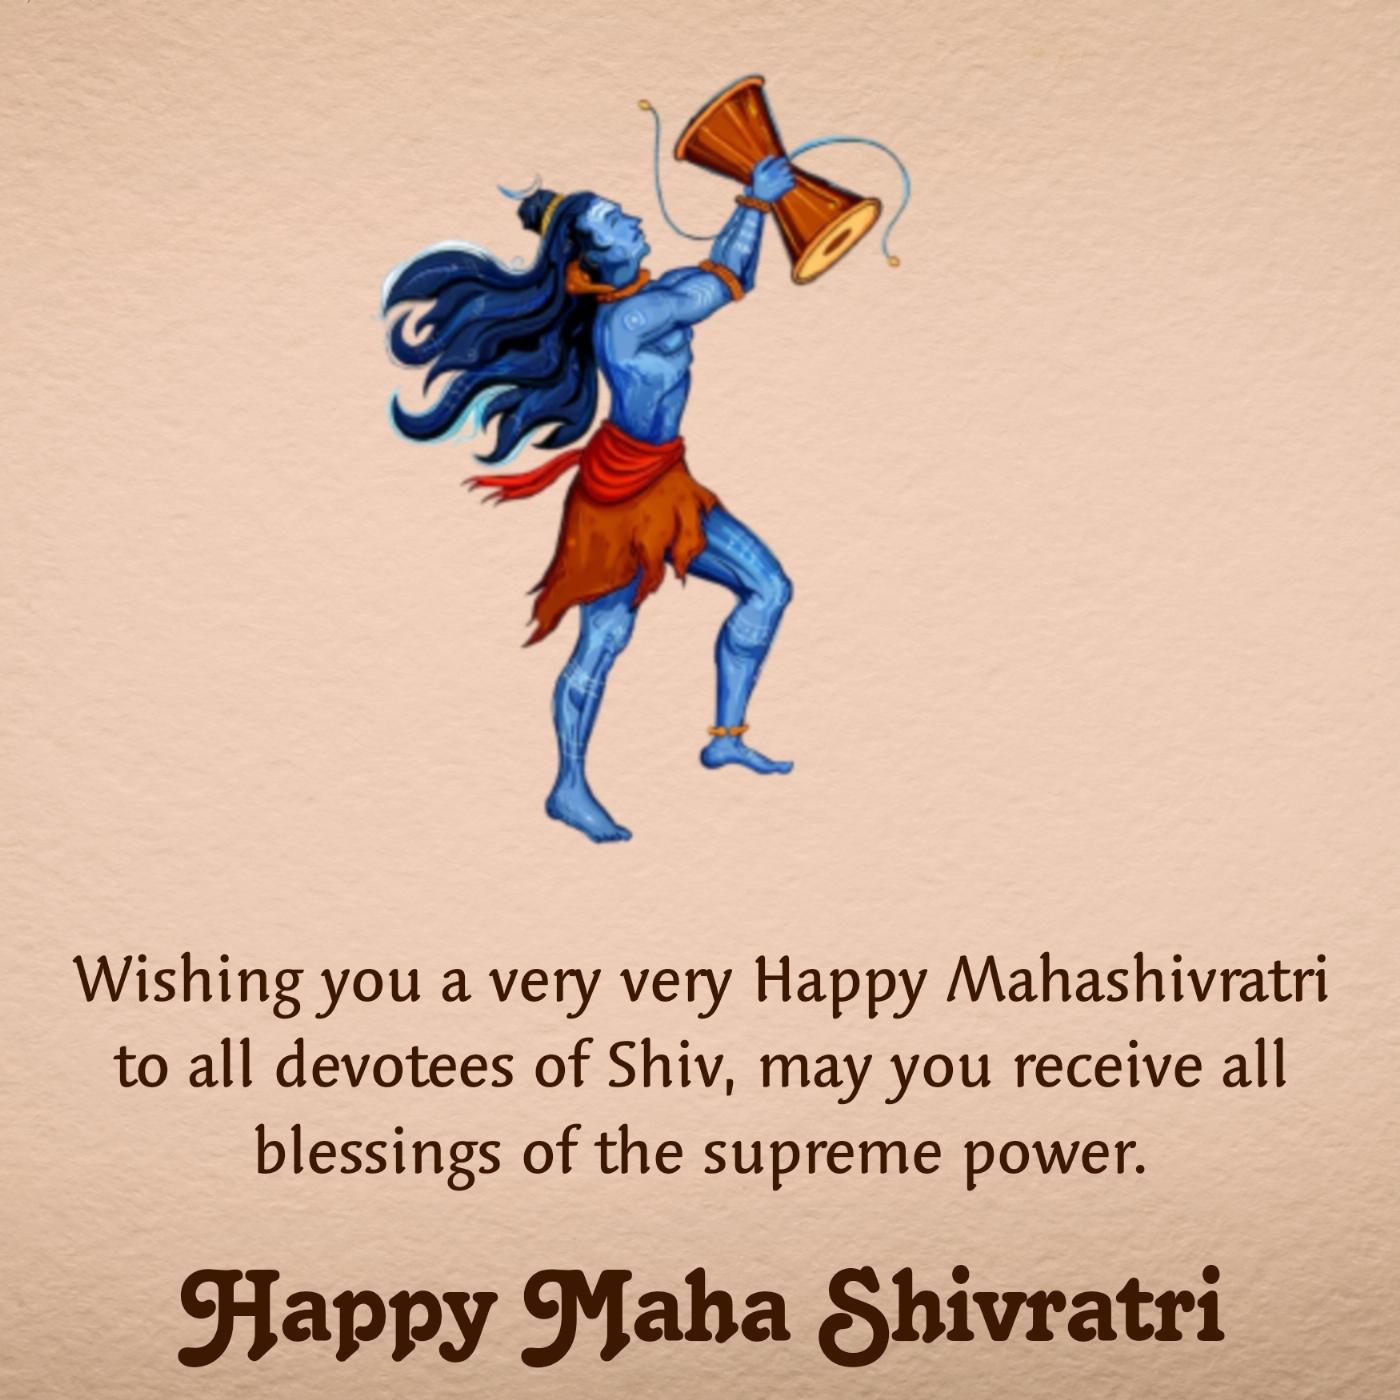 Wishing you a very very Happy Mahashivratri to all devotees of Shiv